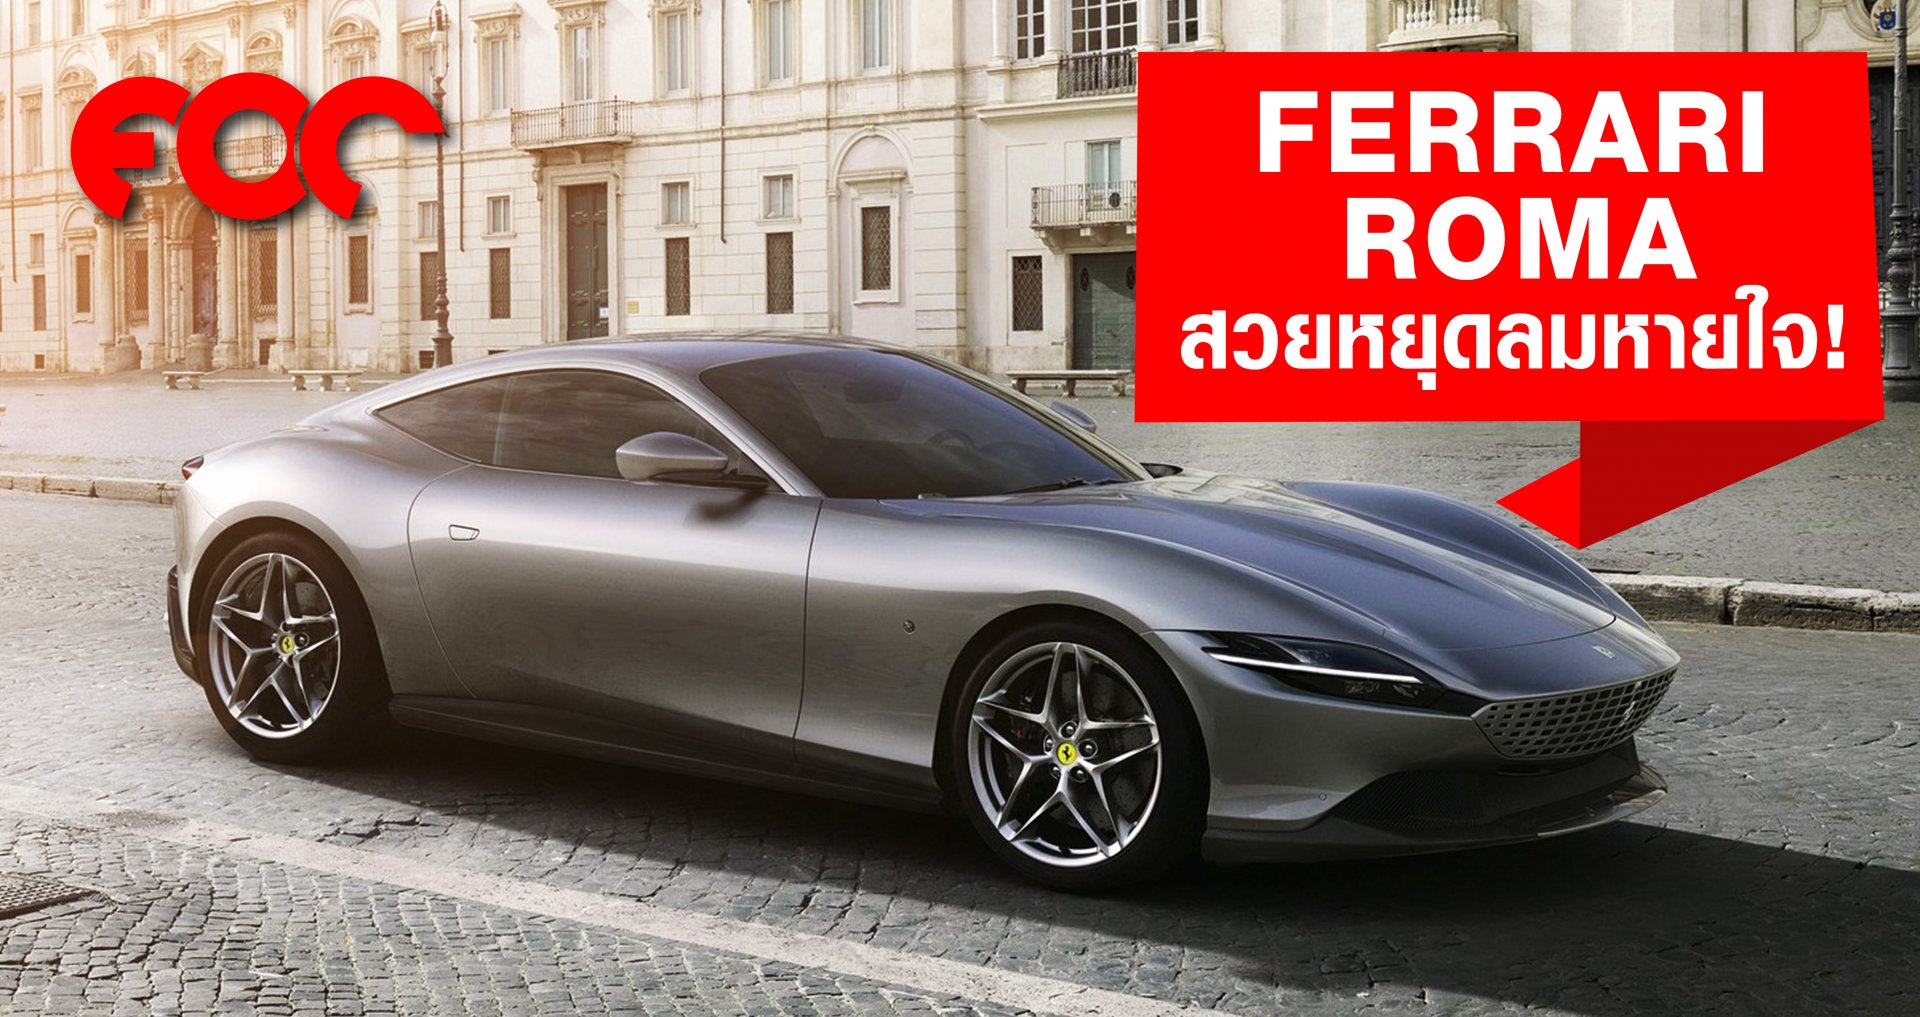 Ferrari Roma สวยหยุดลมหายใจ!